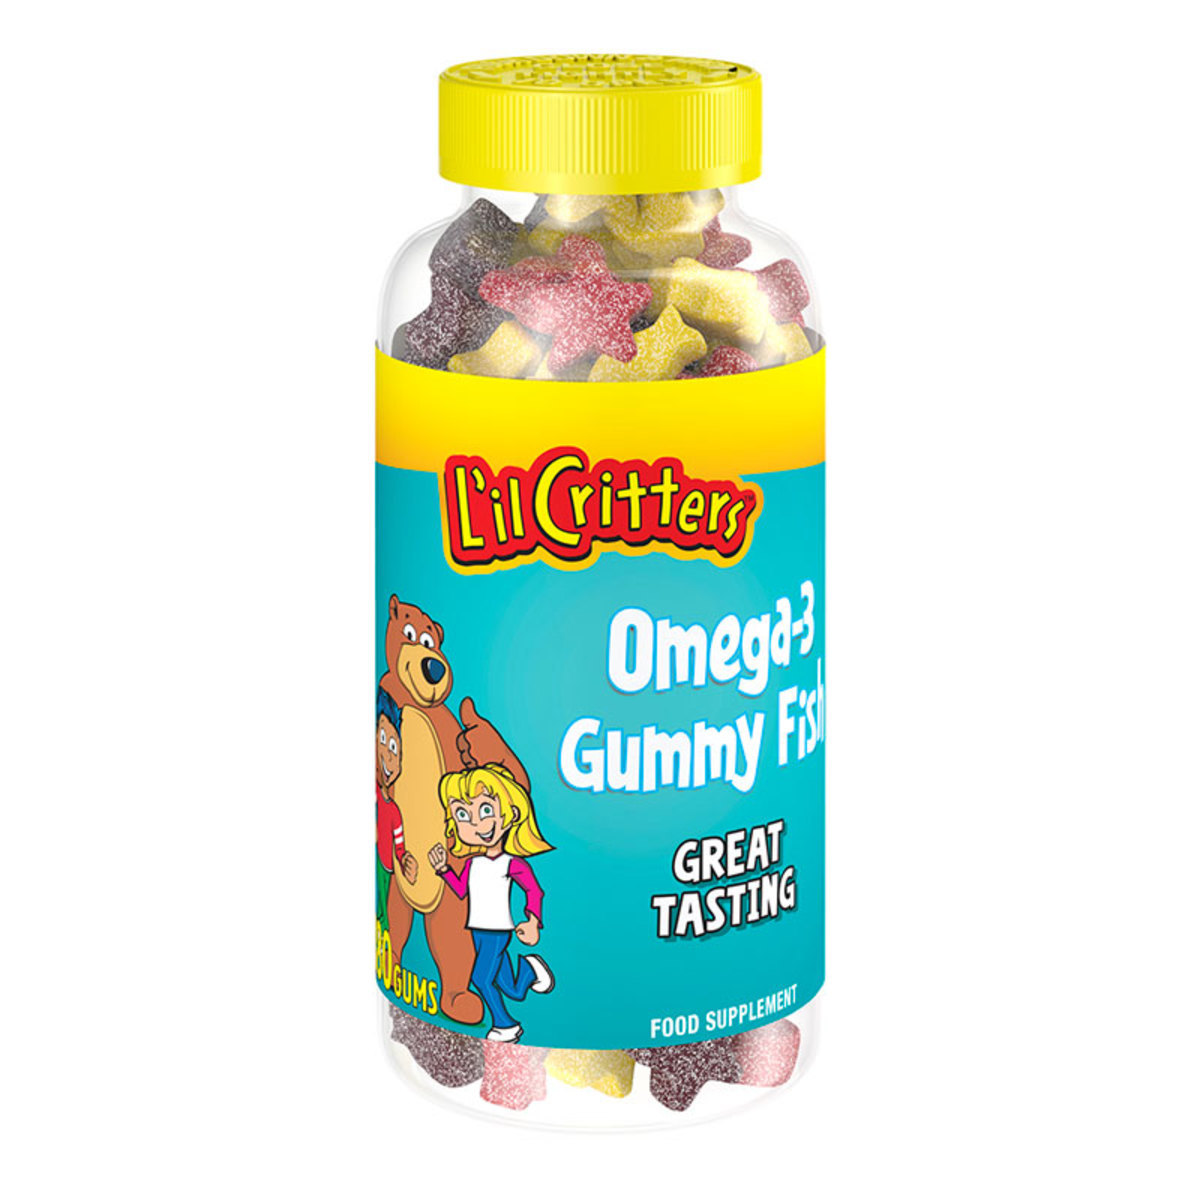 L'il Critters Omega-3 Gummy Fish Food Supplement, 180 per pack